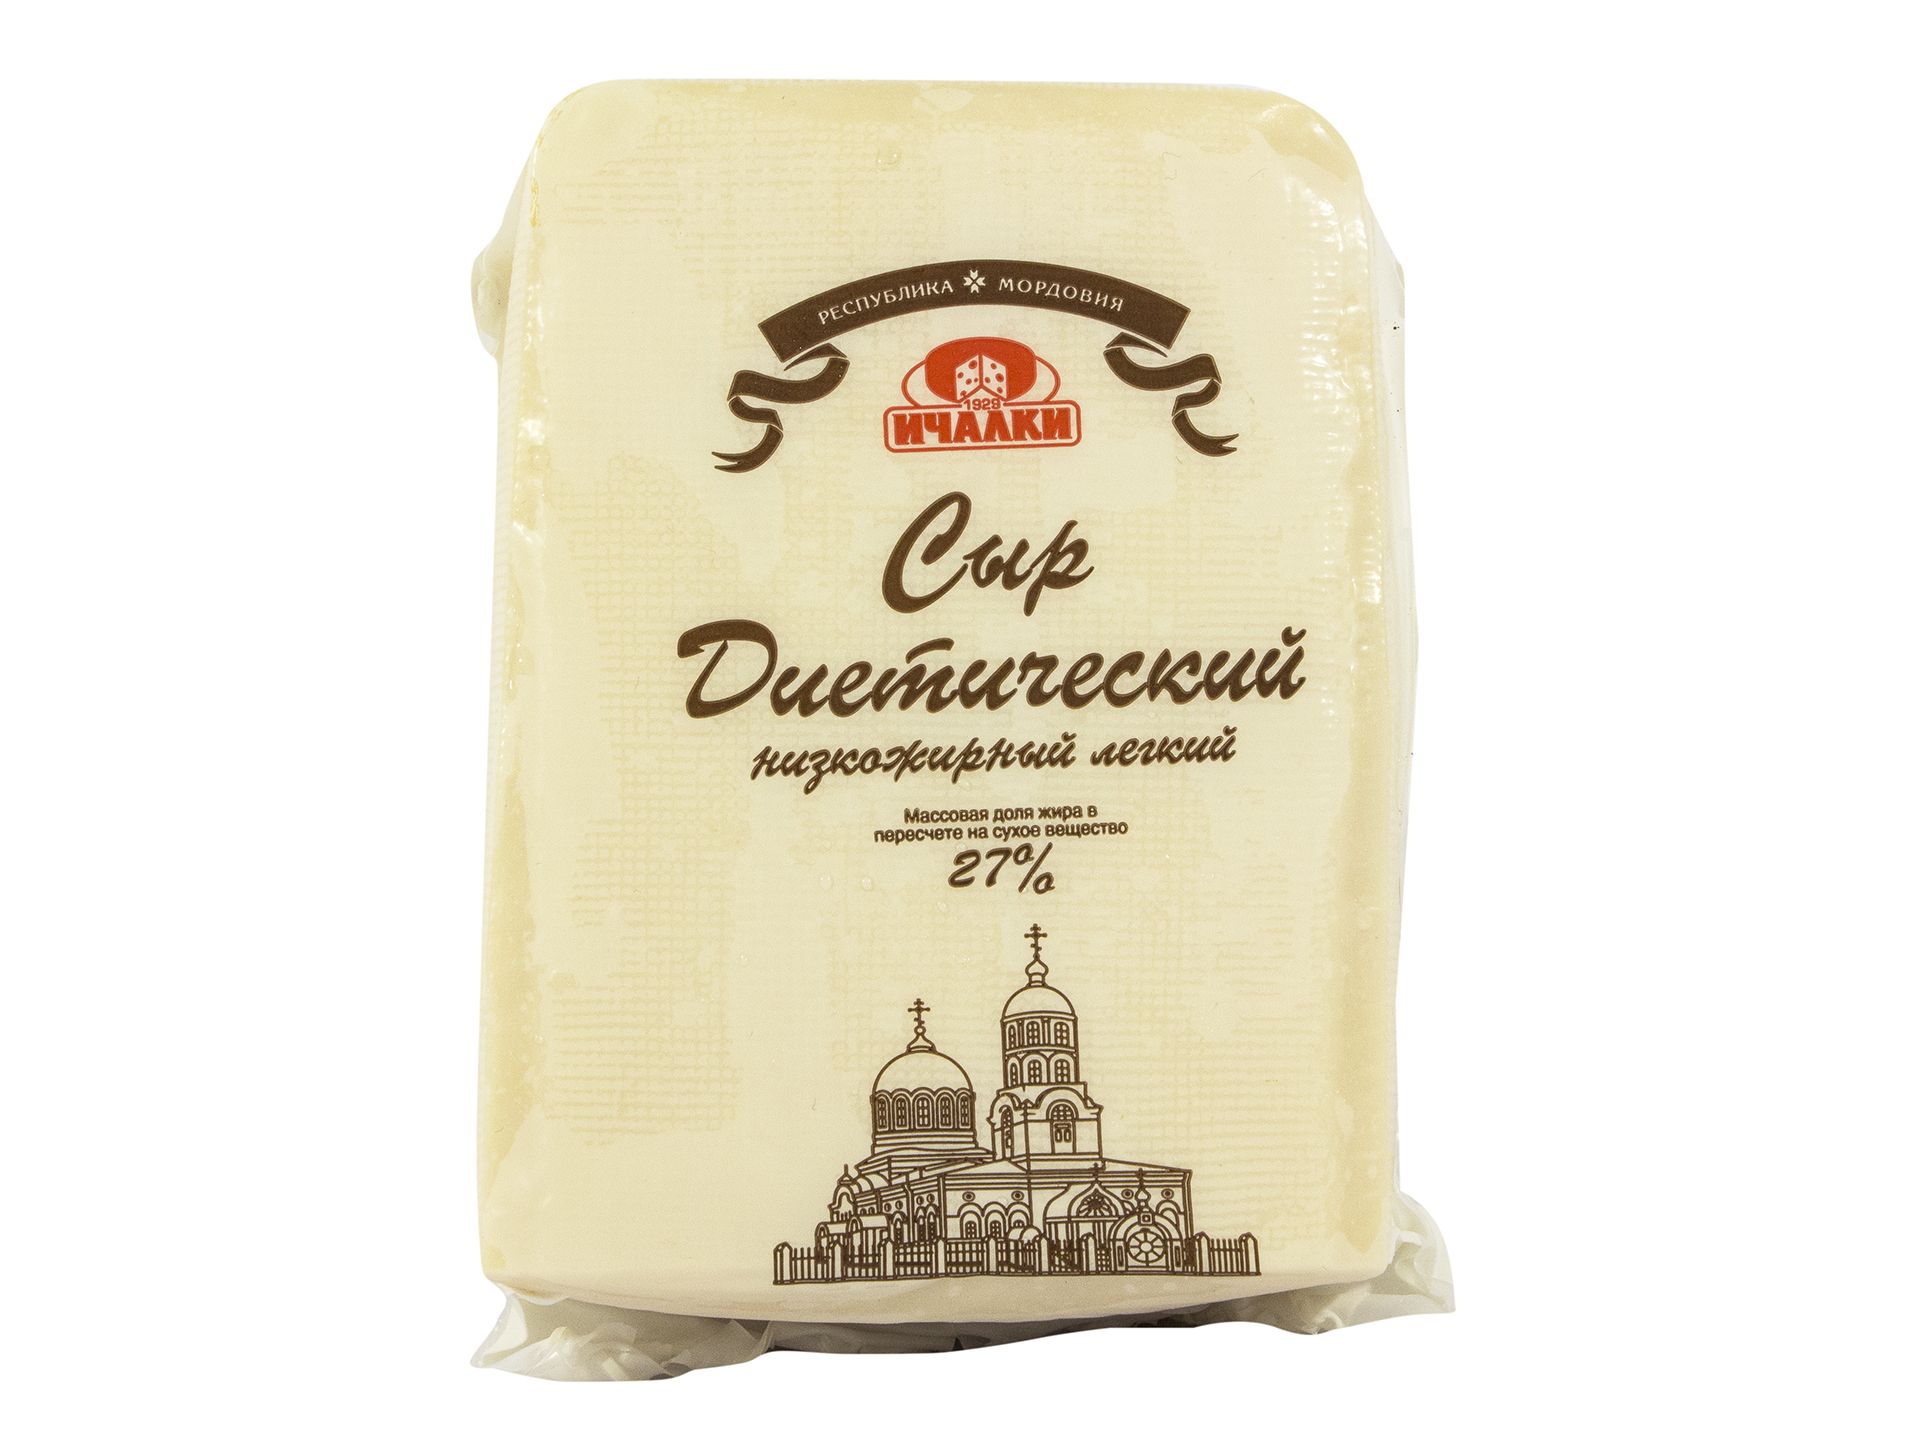 Сыр диетический Ичалки 27% Мордовия